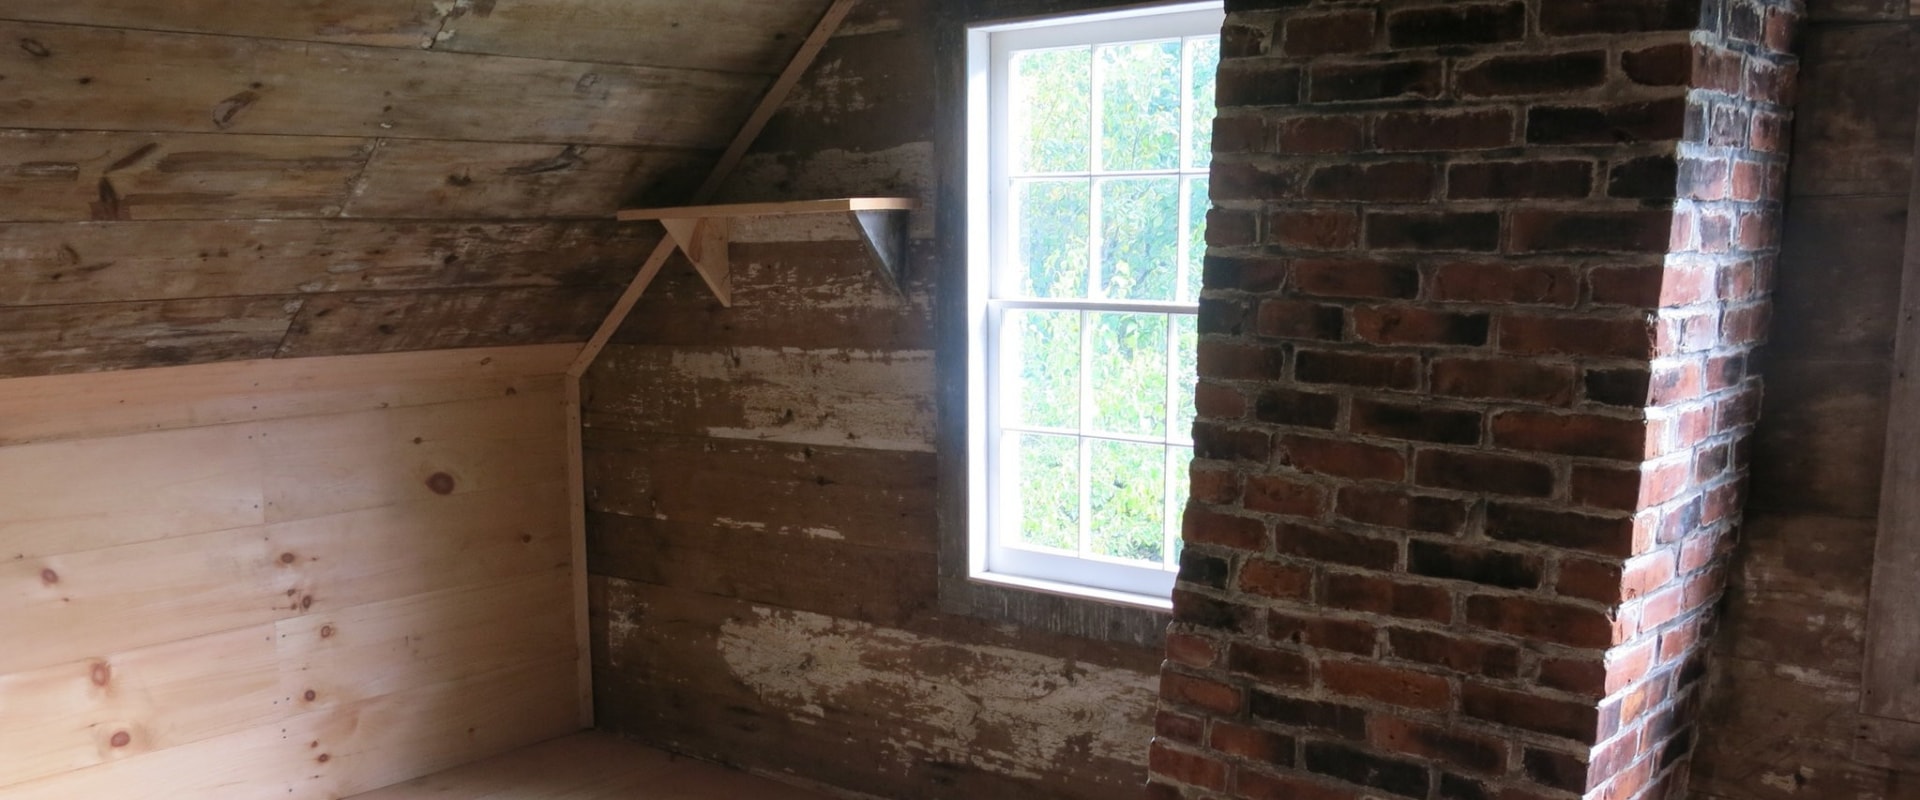 Are attic fans safe?